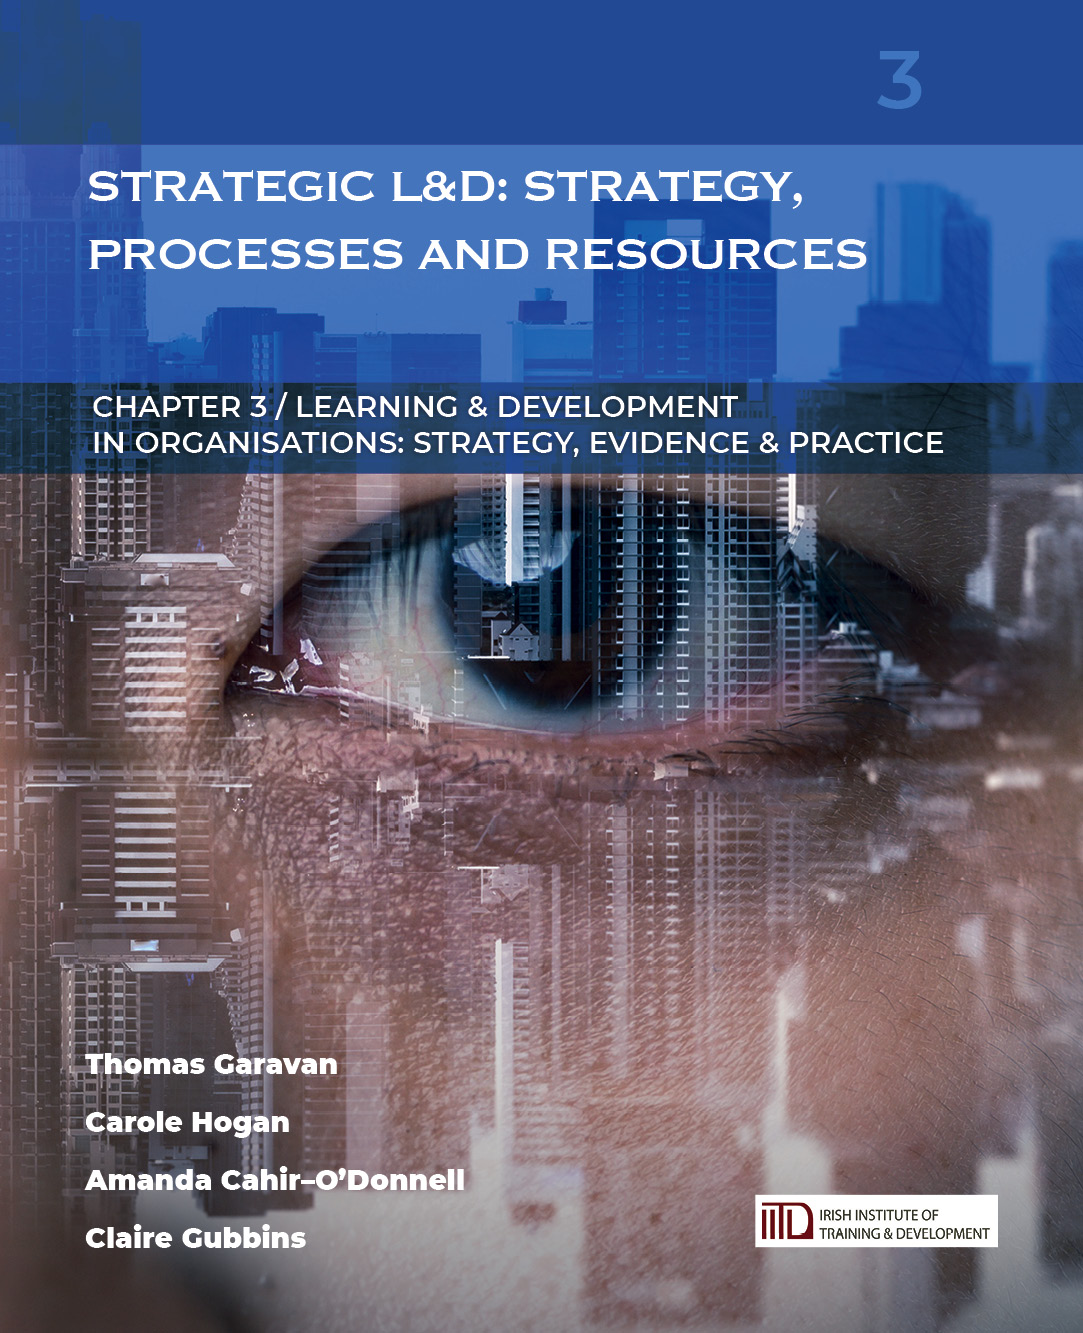 Strategic Learning & Development